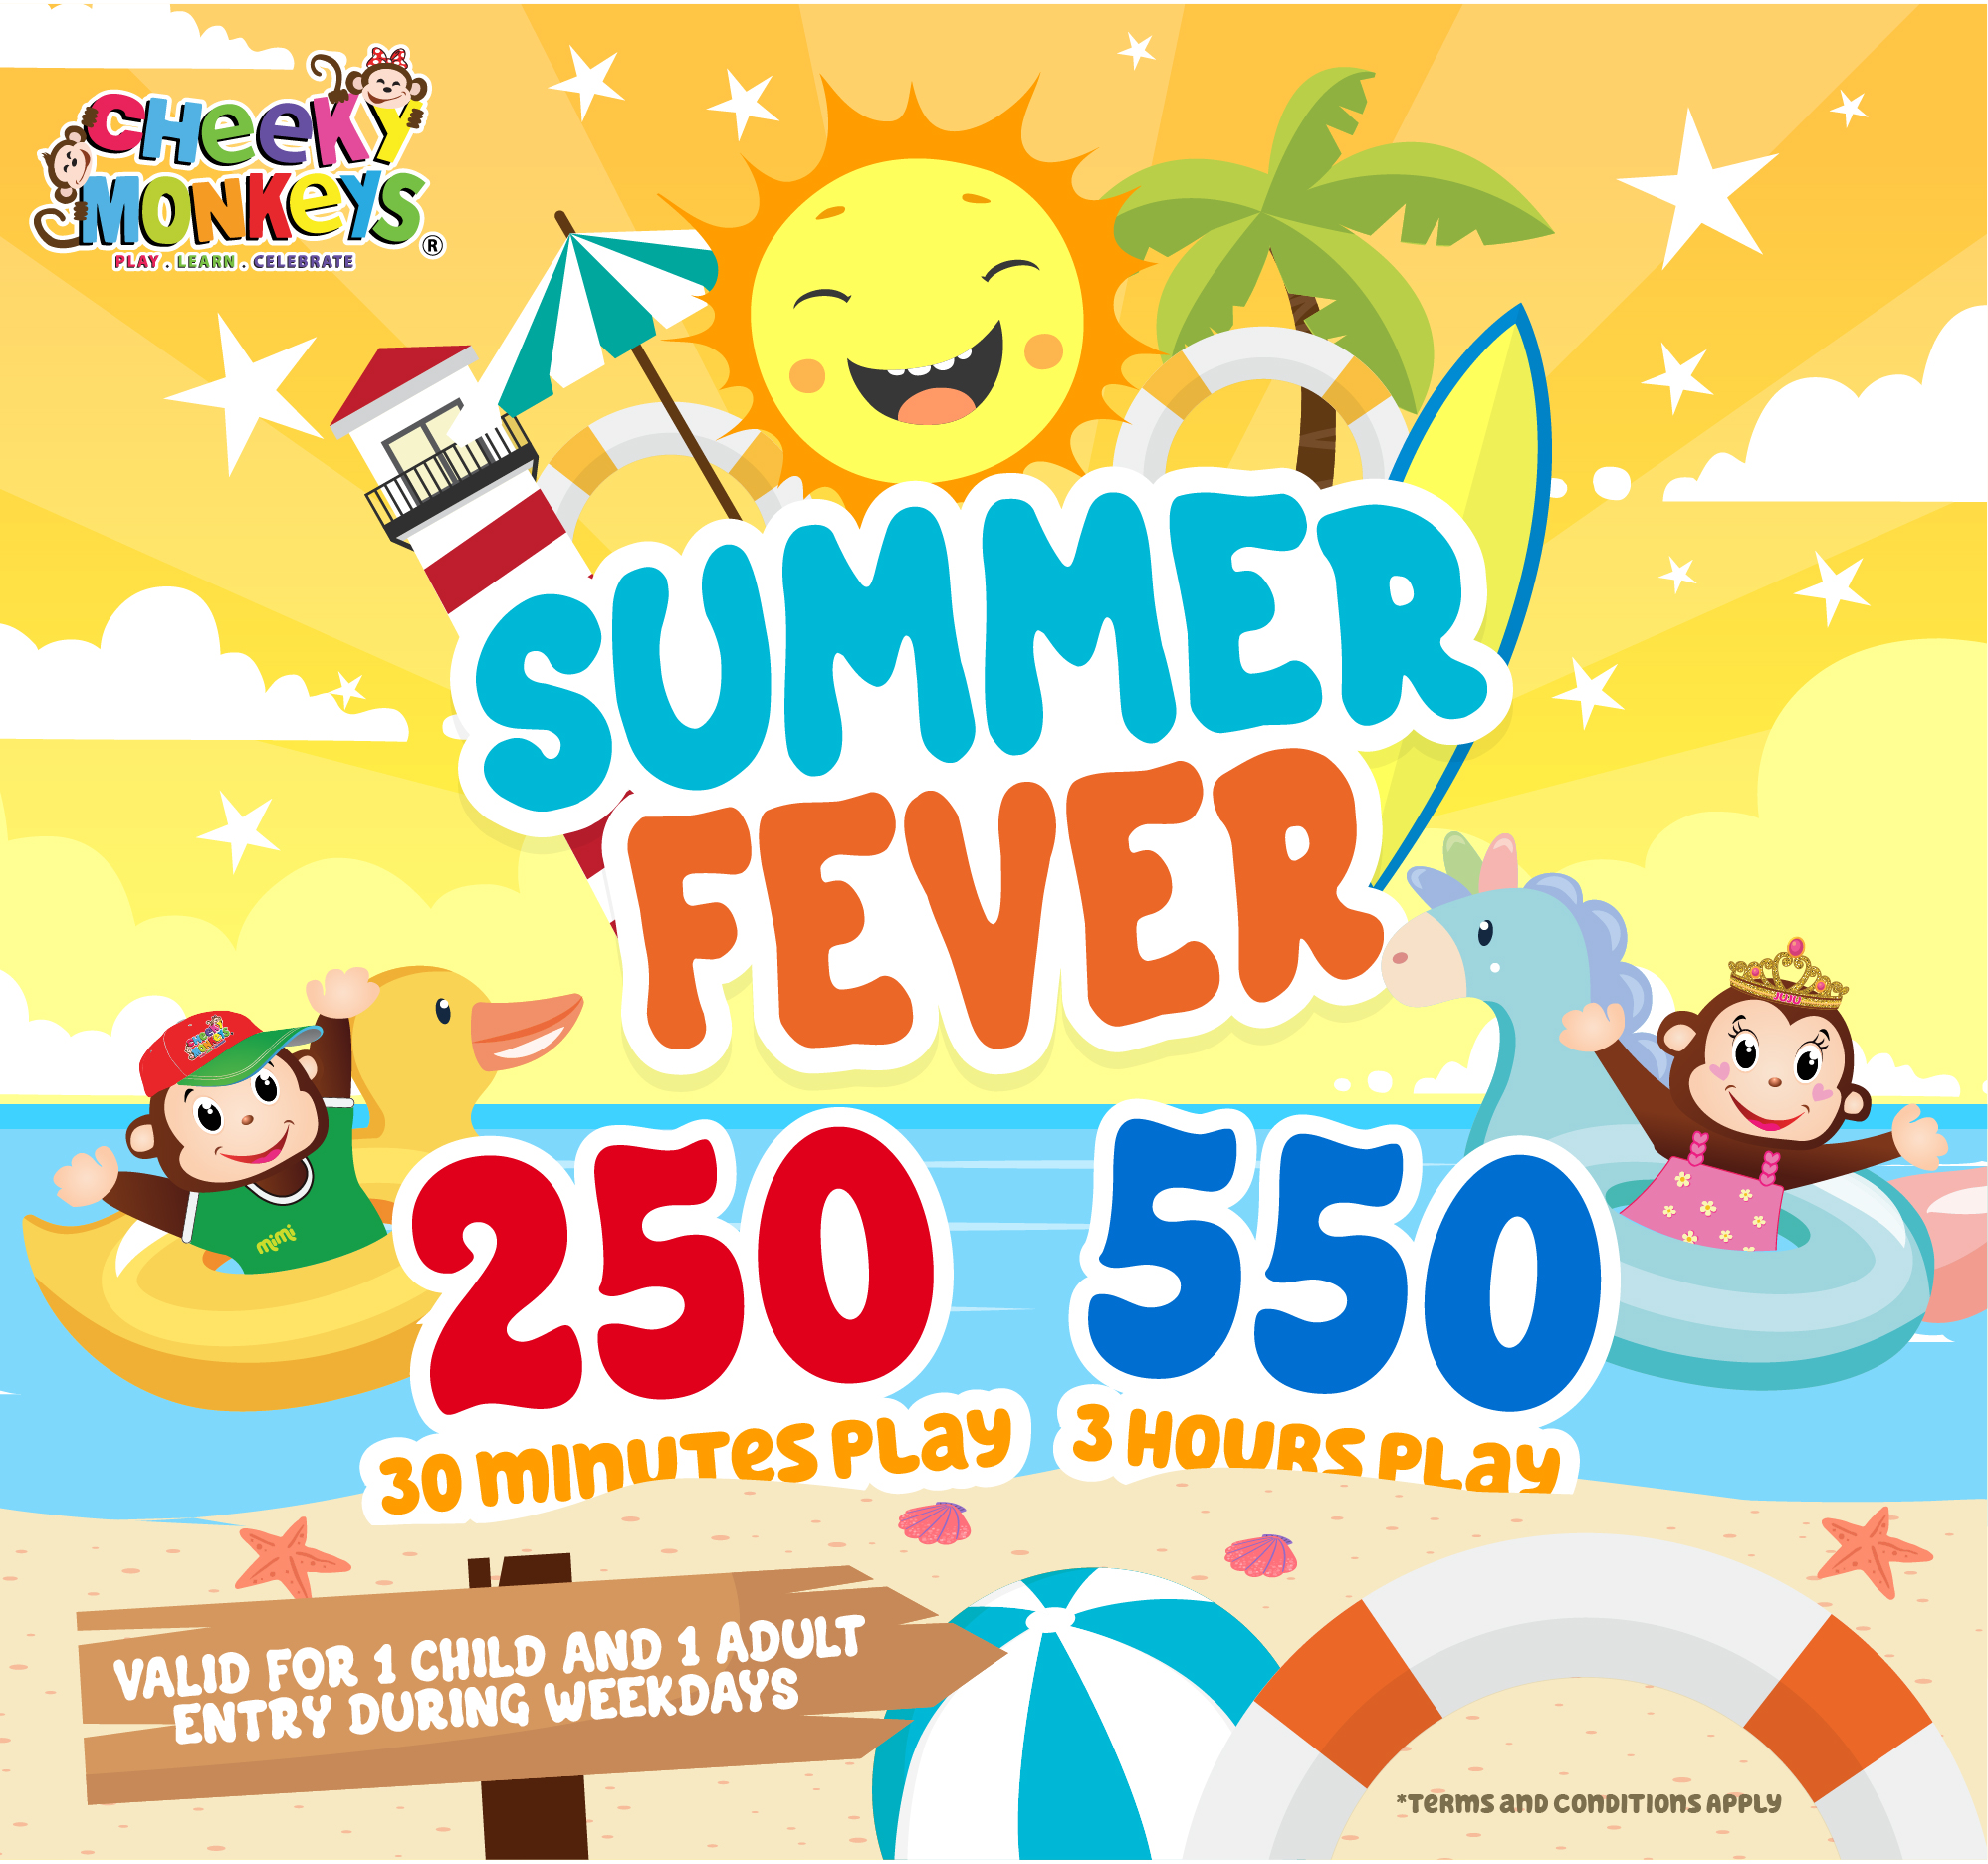 Cheeky Monkeys Philippines - Summer Fever